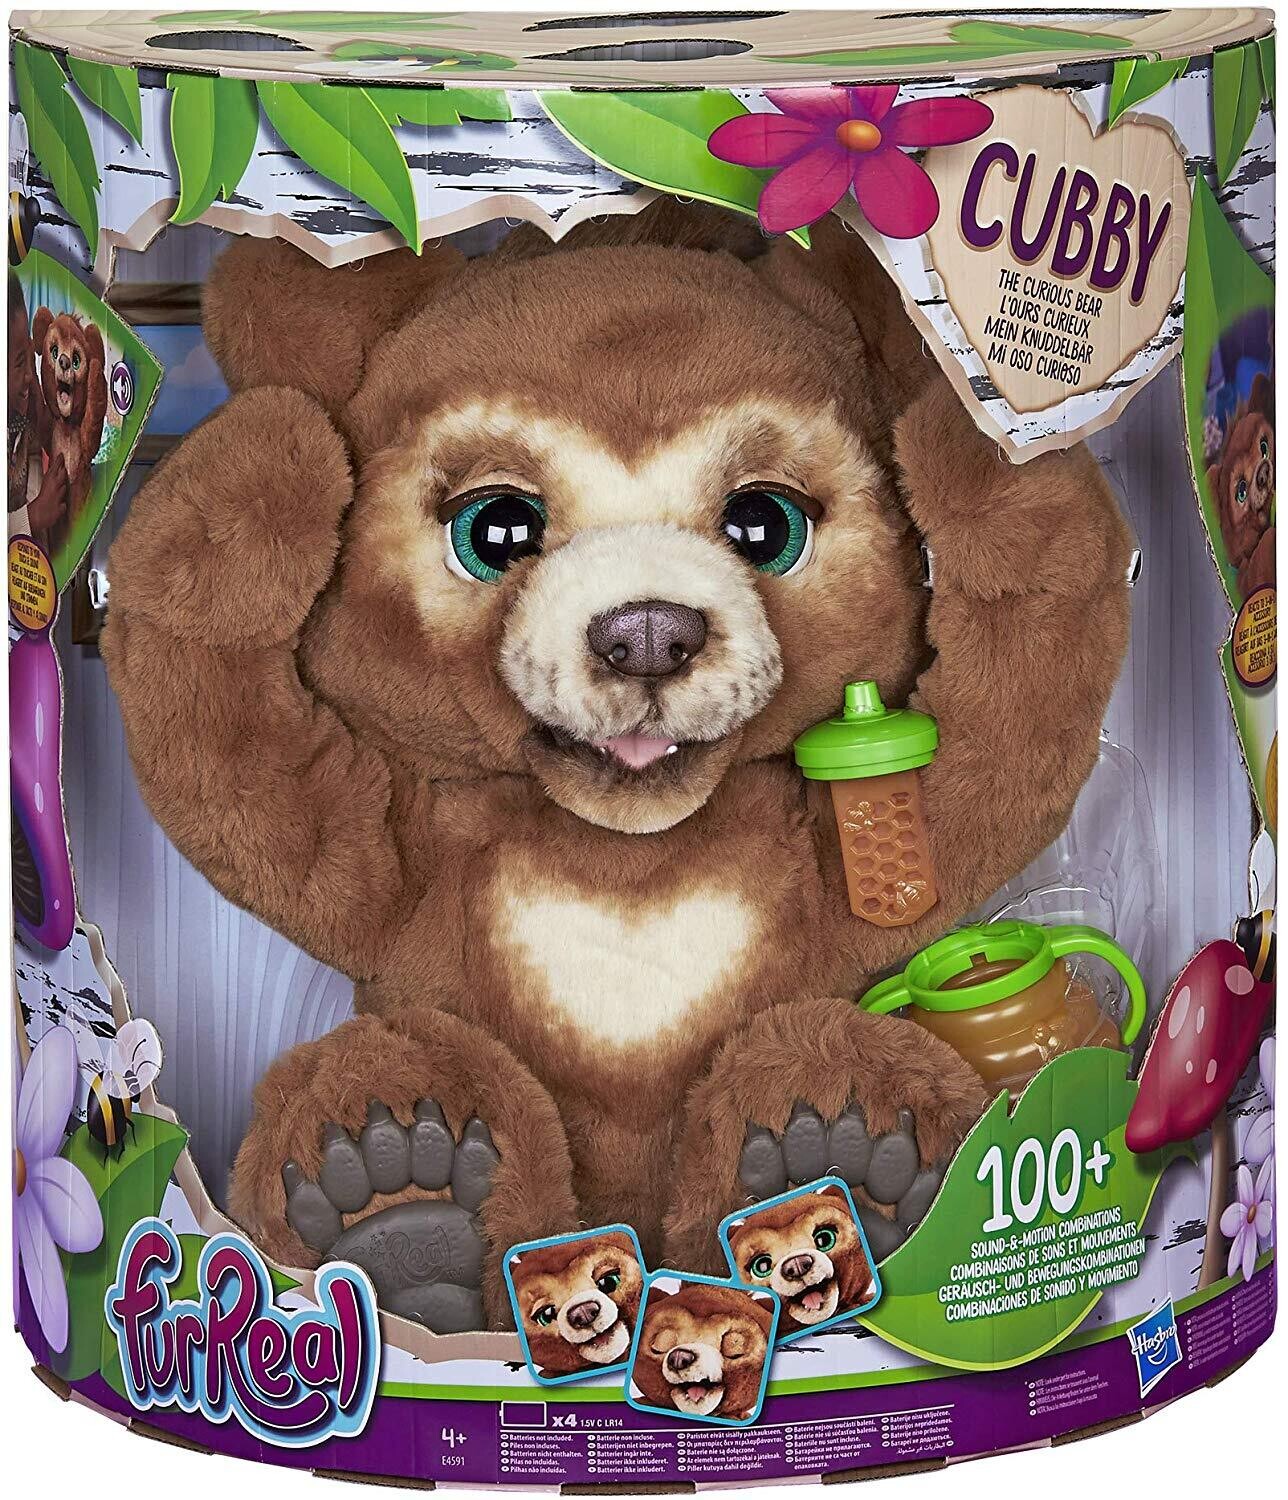 Cubby orsetto curioso